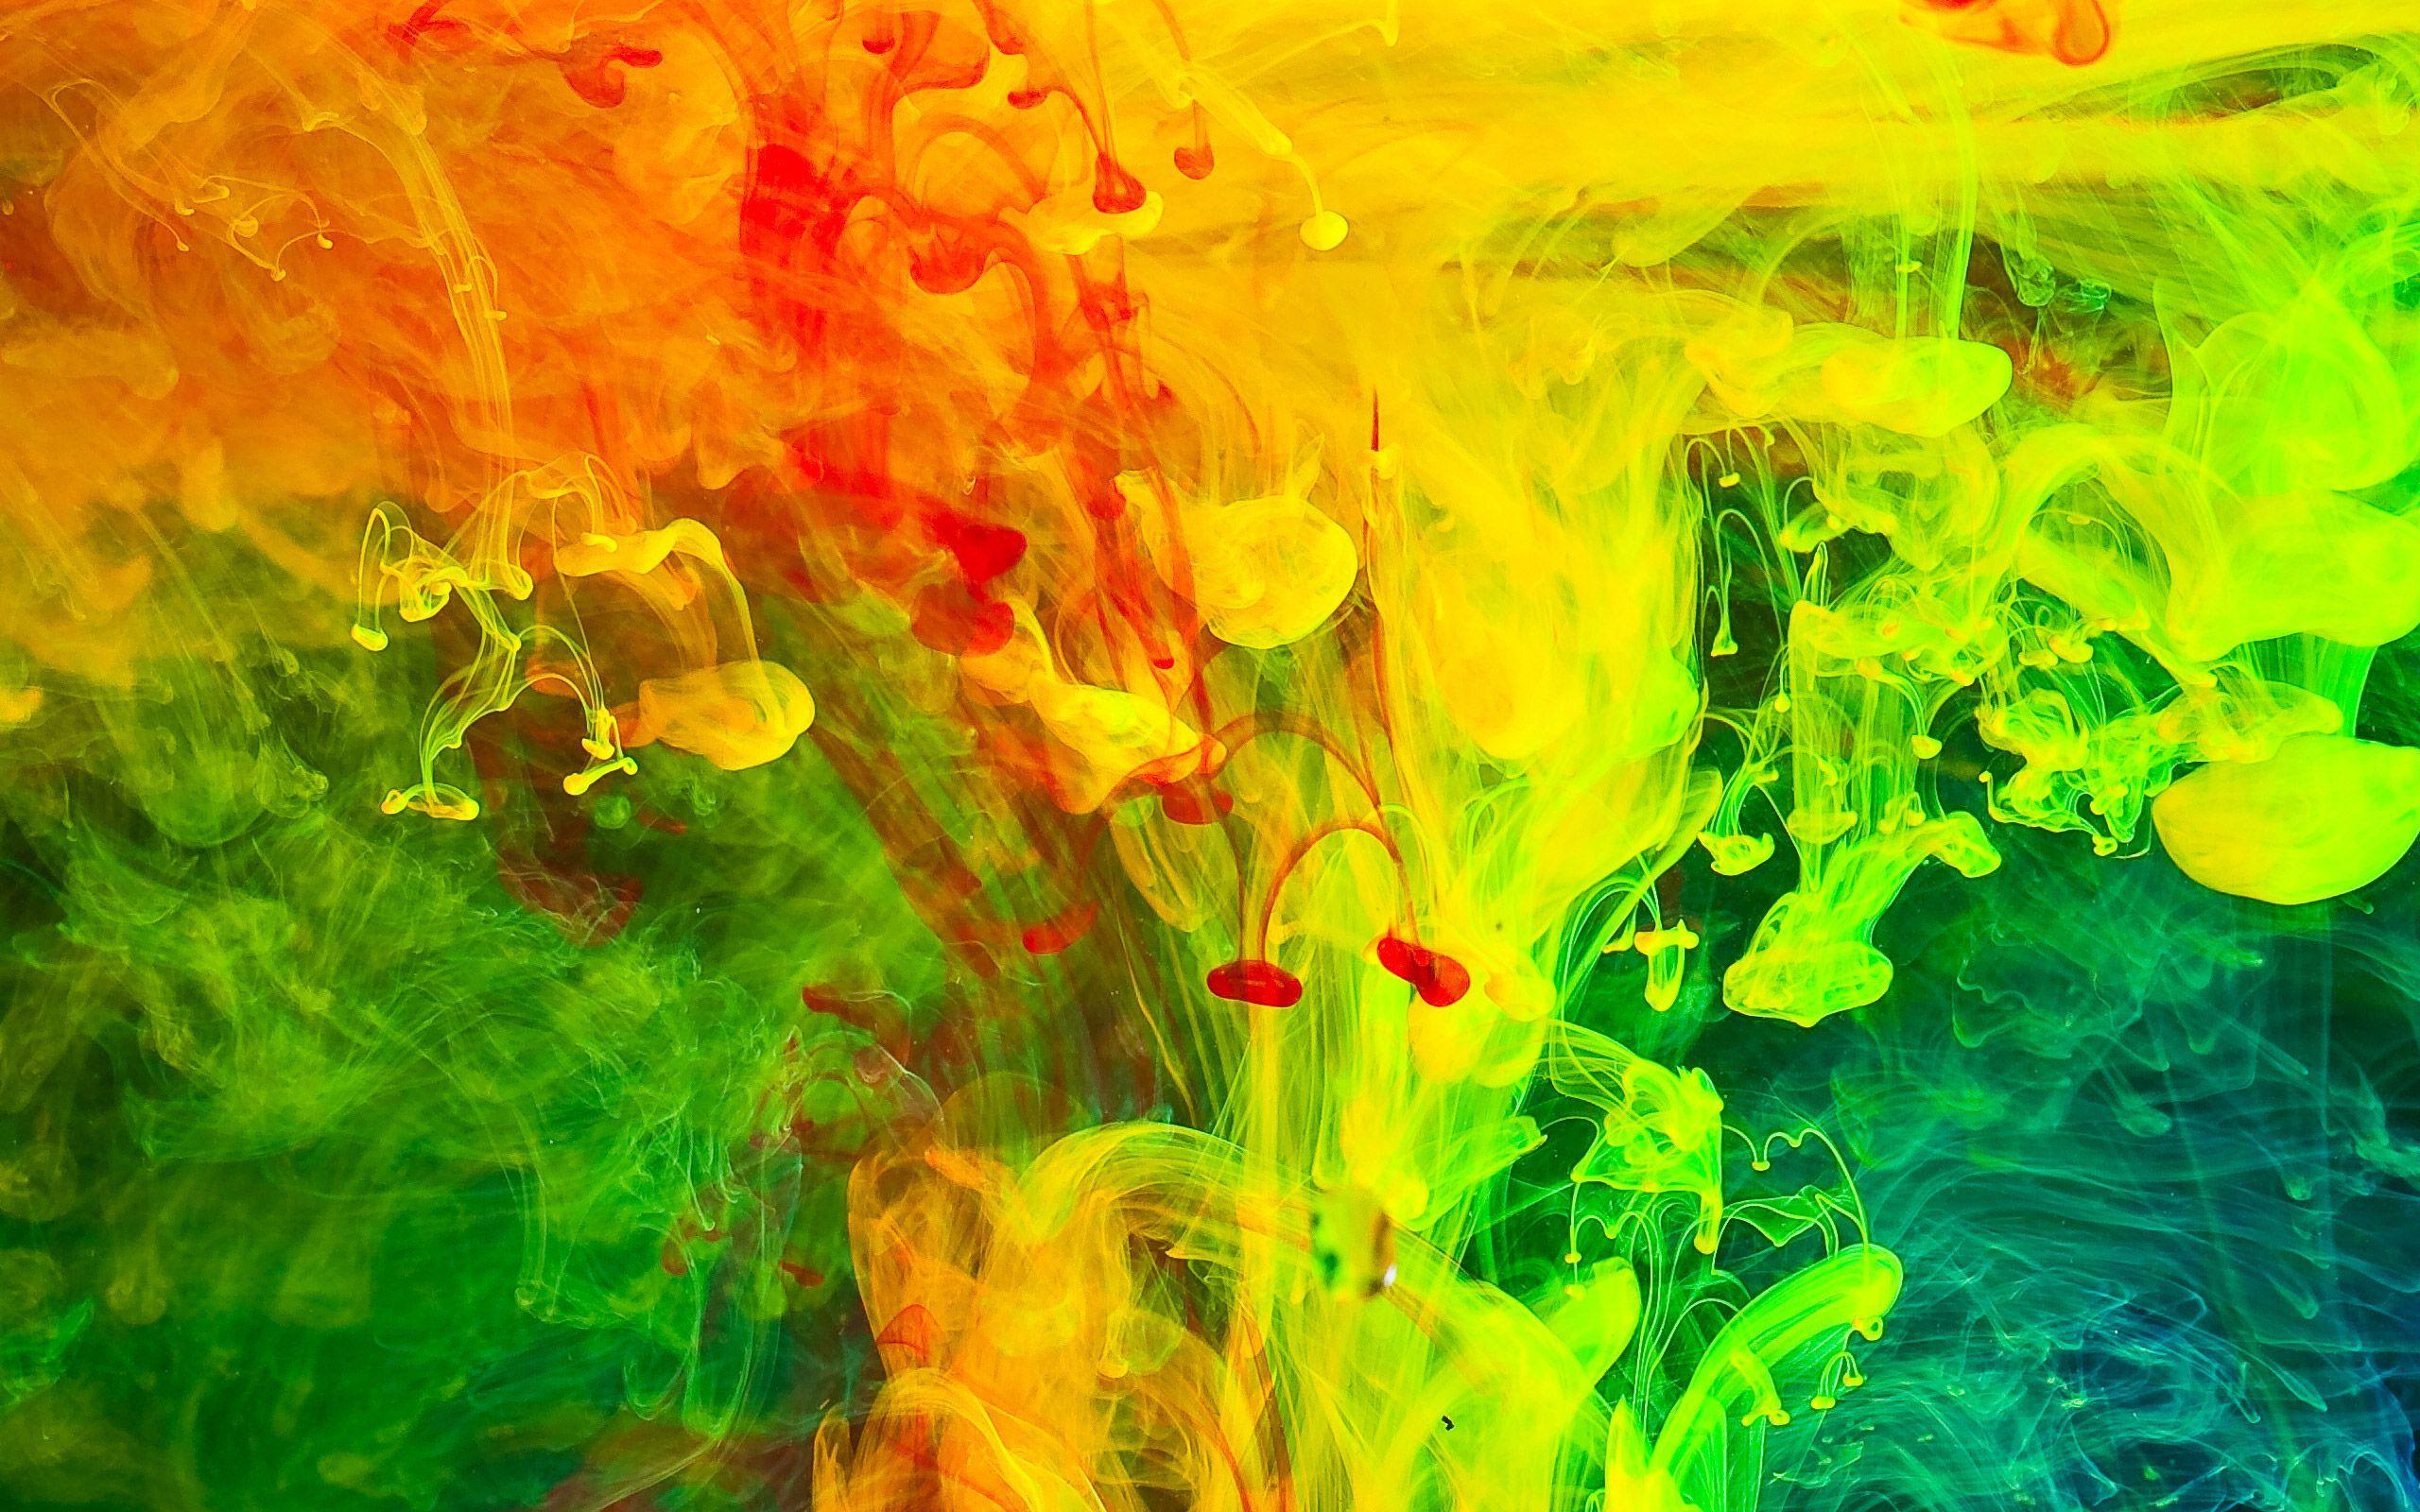 Mixed Colors HD Wallpaper Placecom. Artistic wallpaper, Painting wallpaper, Smoke art